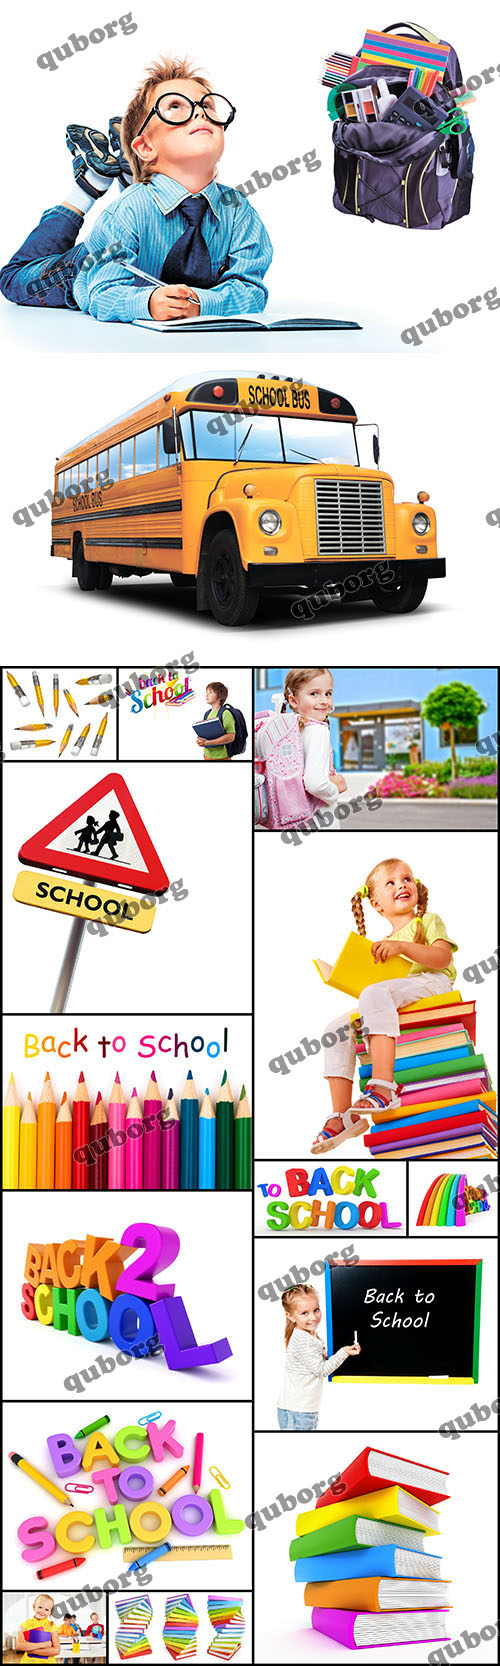 Stock Photos - Back to School Part 2